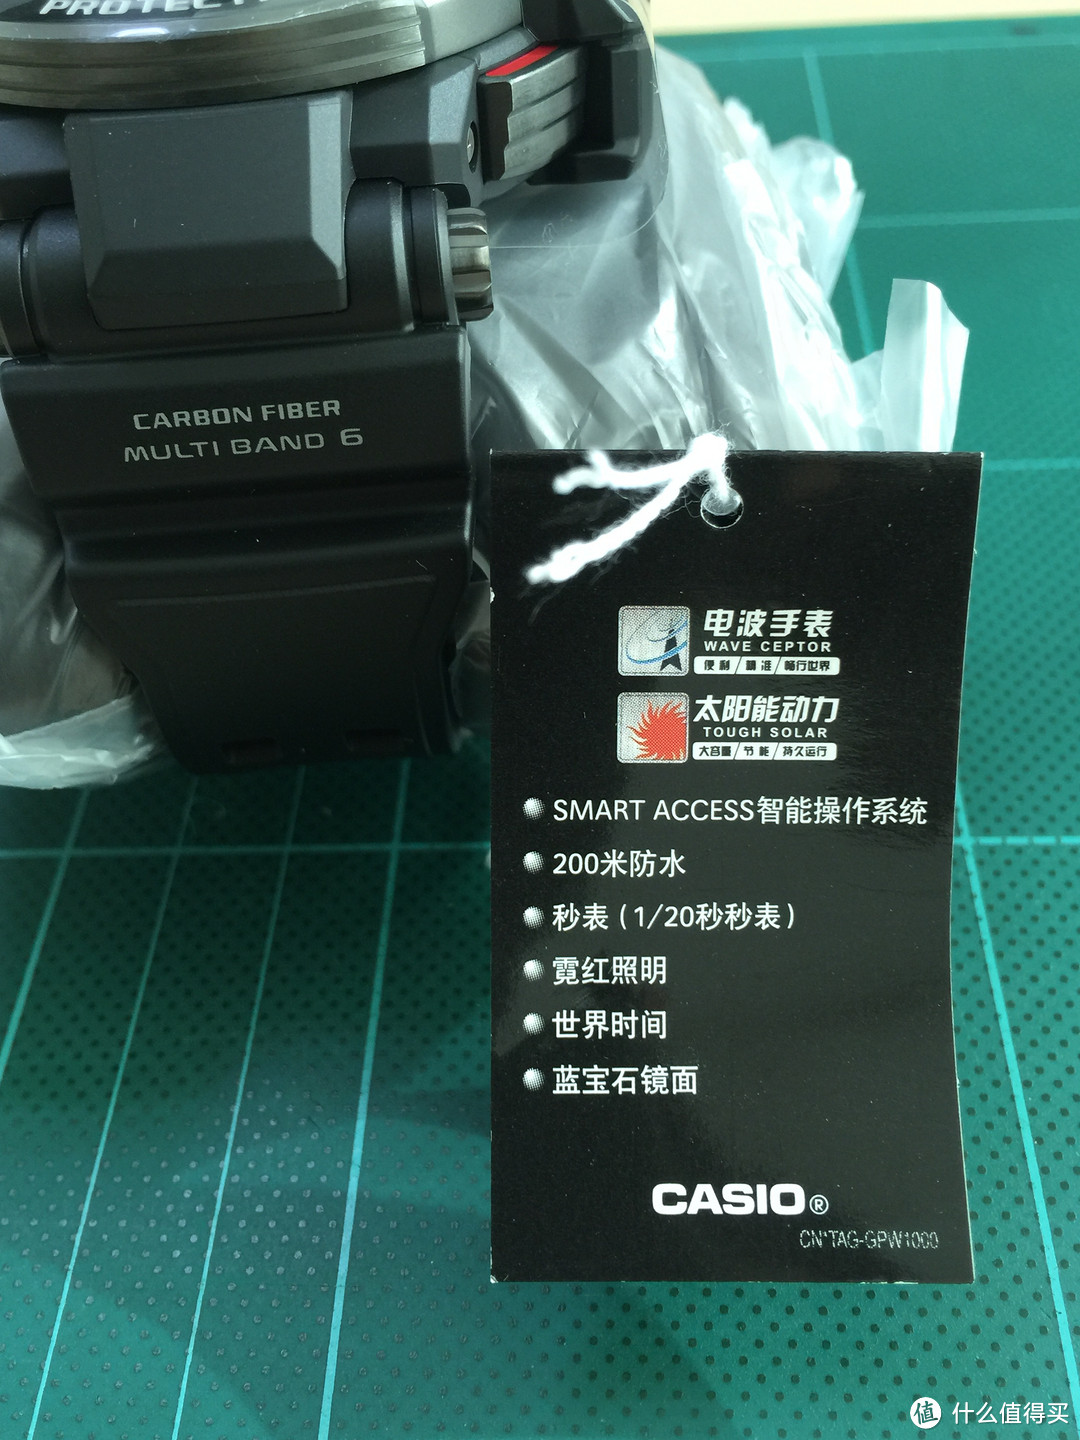 CASIO 卡西欧 G-SHOCK GPW-1000-1APR简单开箱